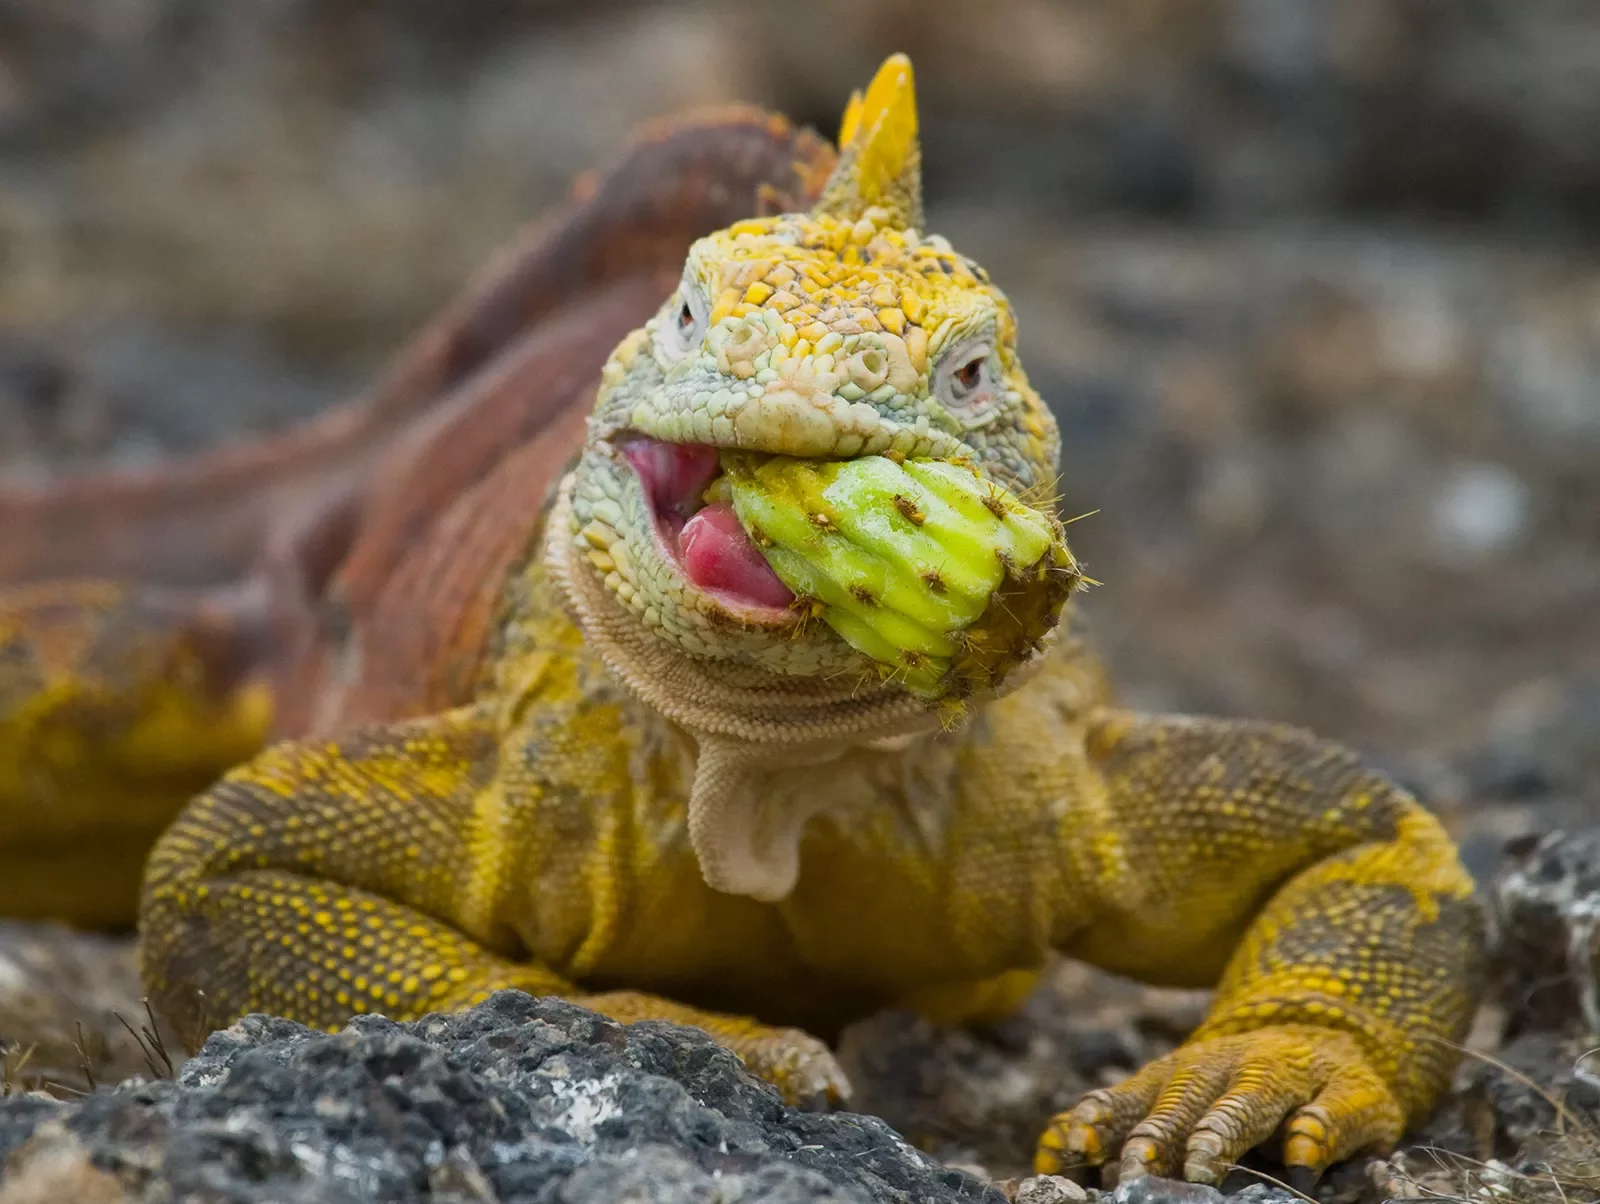 Lizard eating